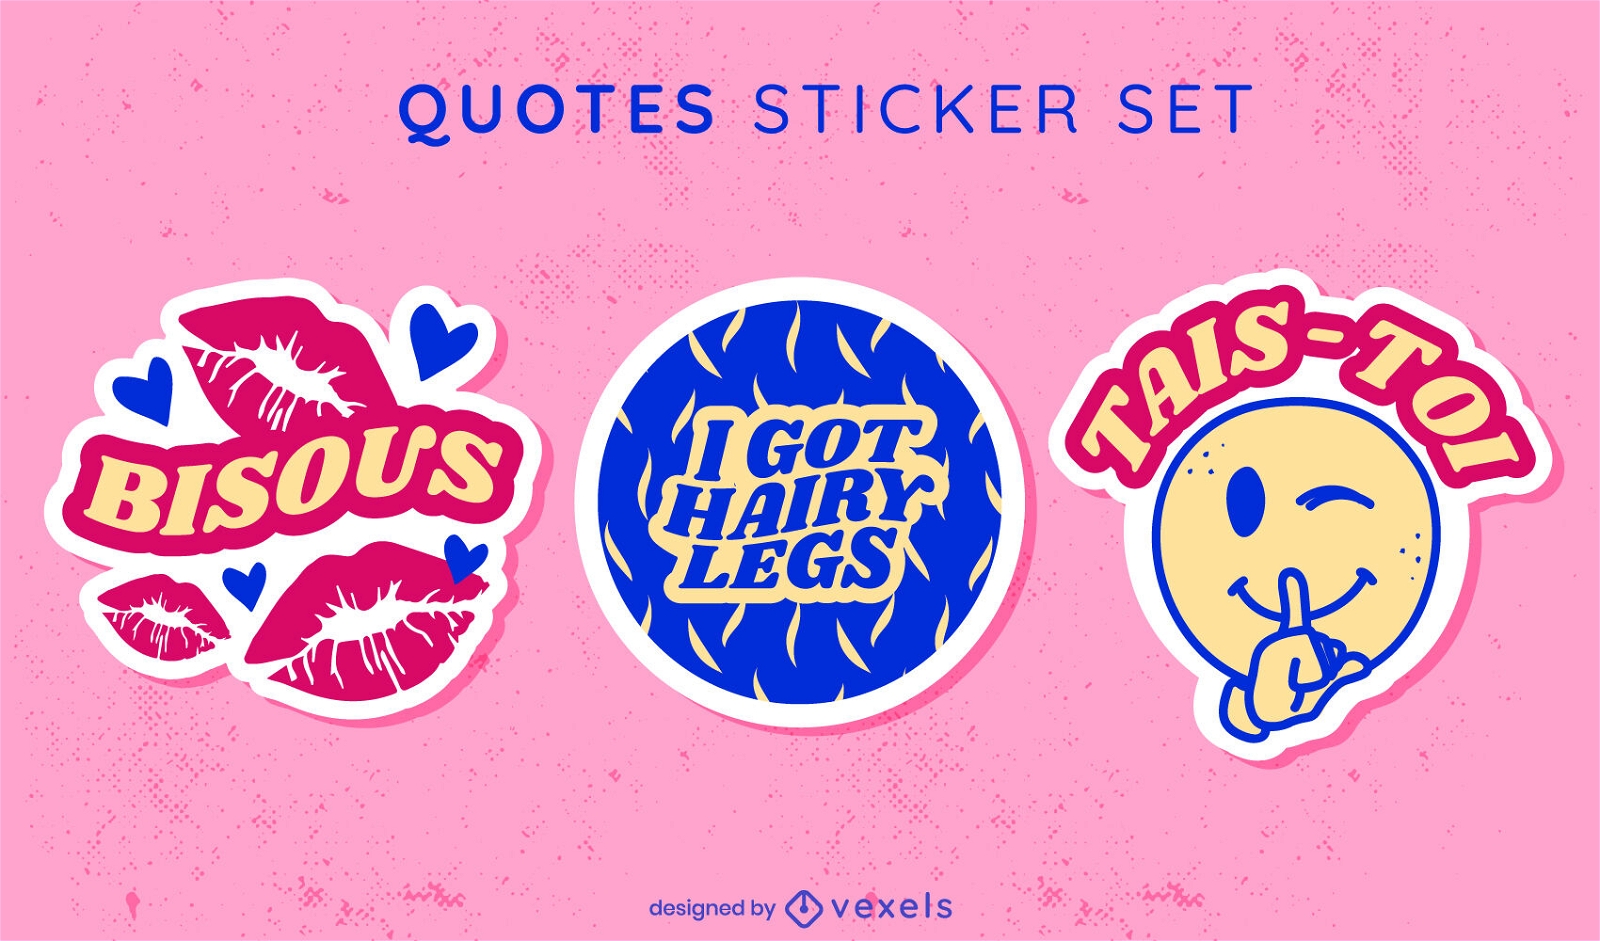 Hairy legs quotes sticker set